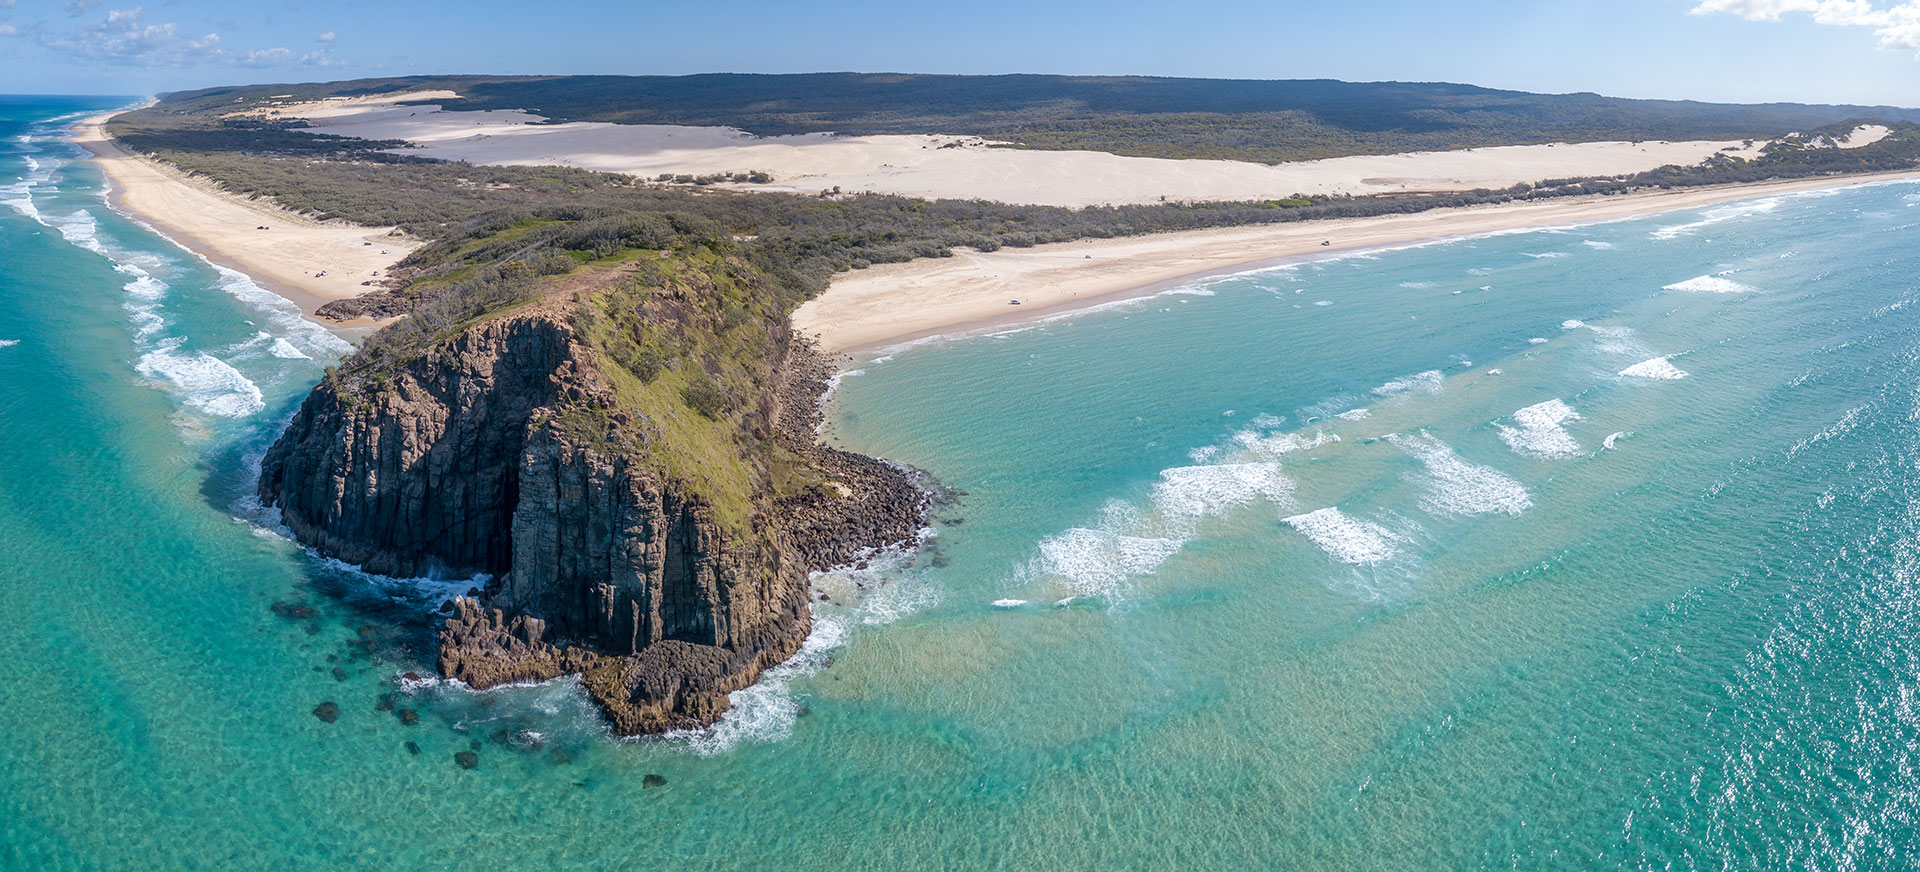 60 Minute Scenic Flight from Hervey Bay Air Fraser Island